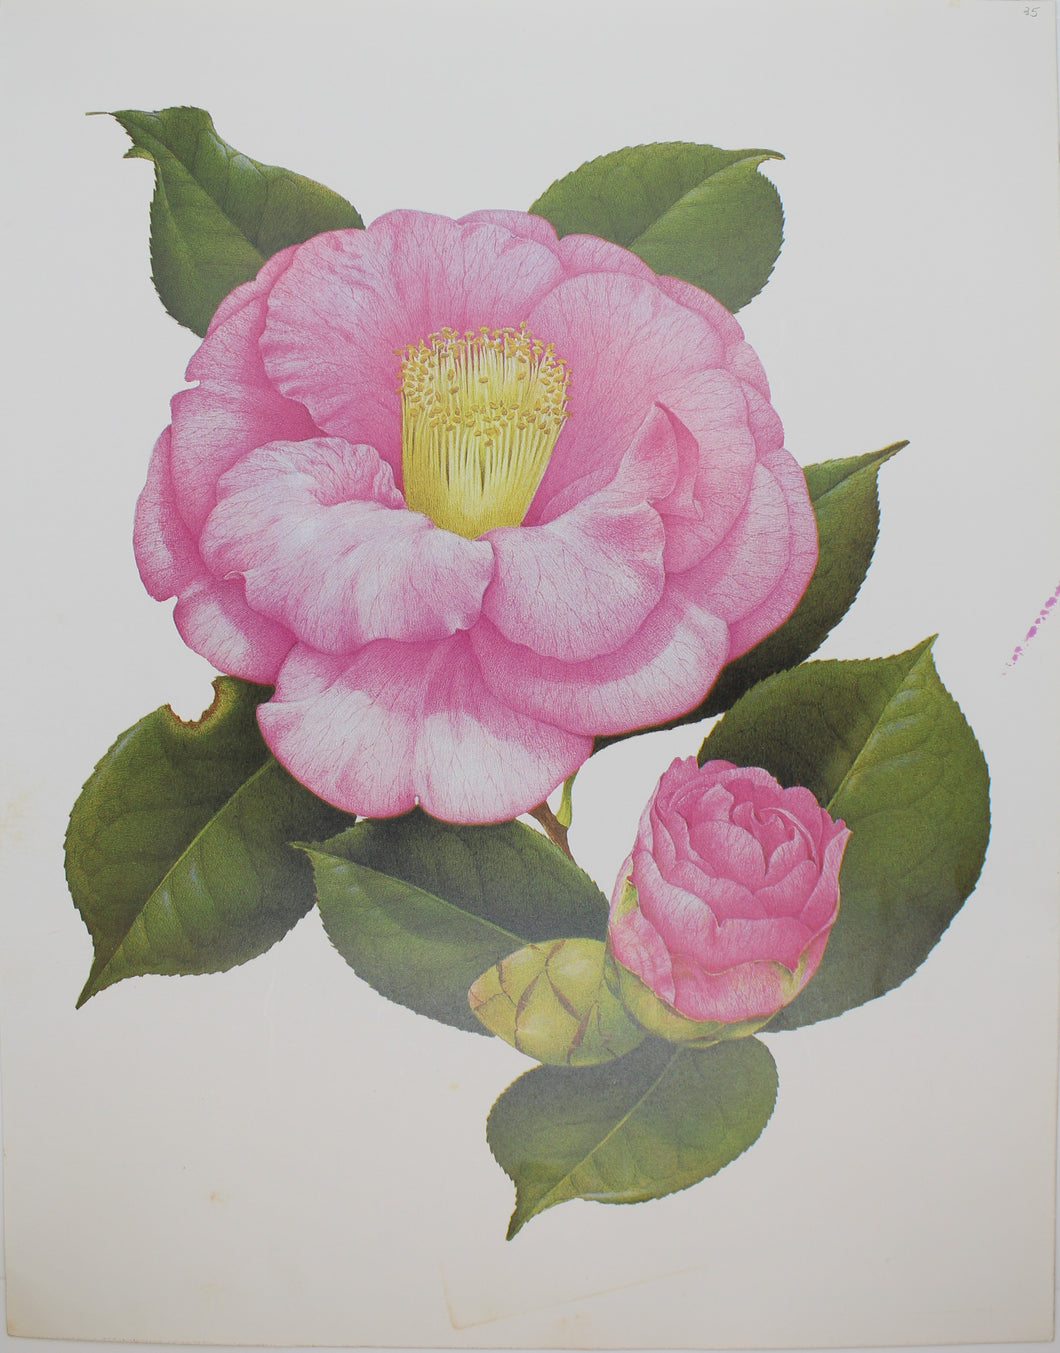 Botanical, Longhurst Peter, Camellia, Howard Asper, Creticulata x C. Japonica hybrid, Plate 35,